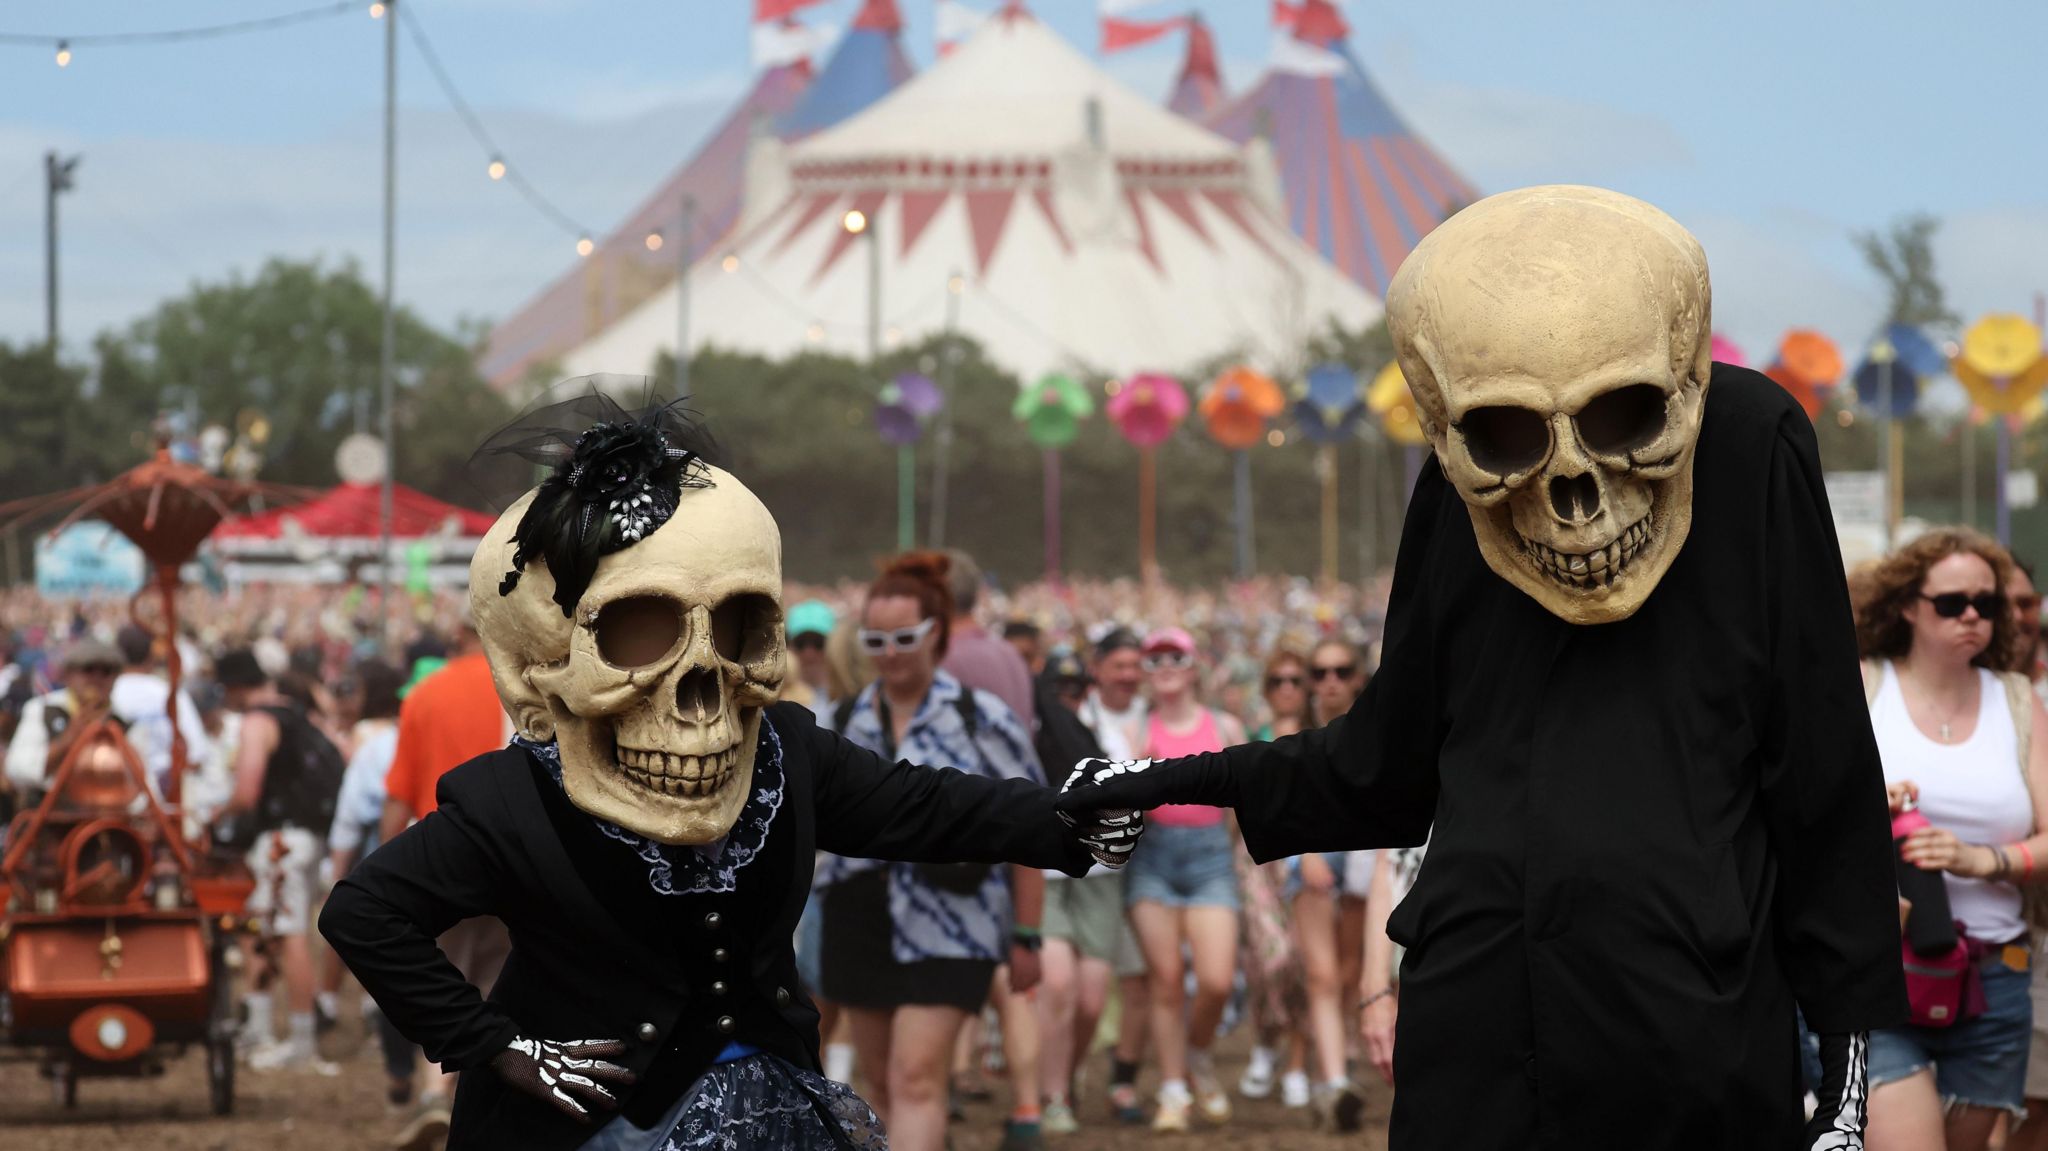 People dressed as skeletons on festival site